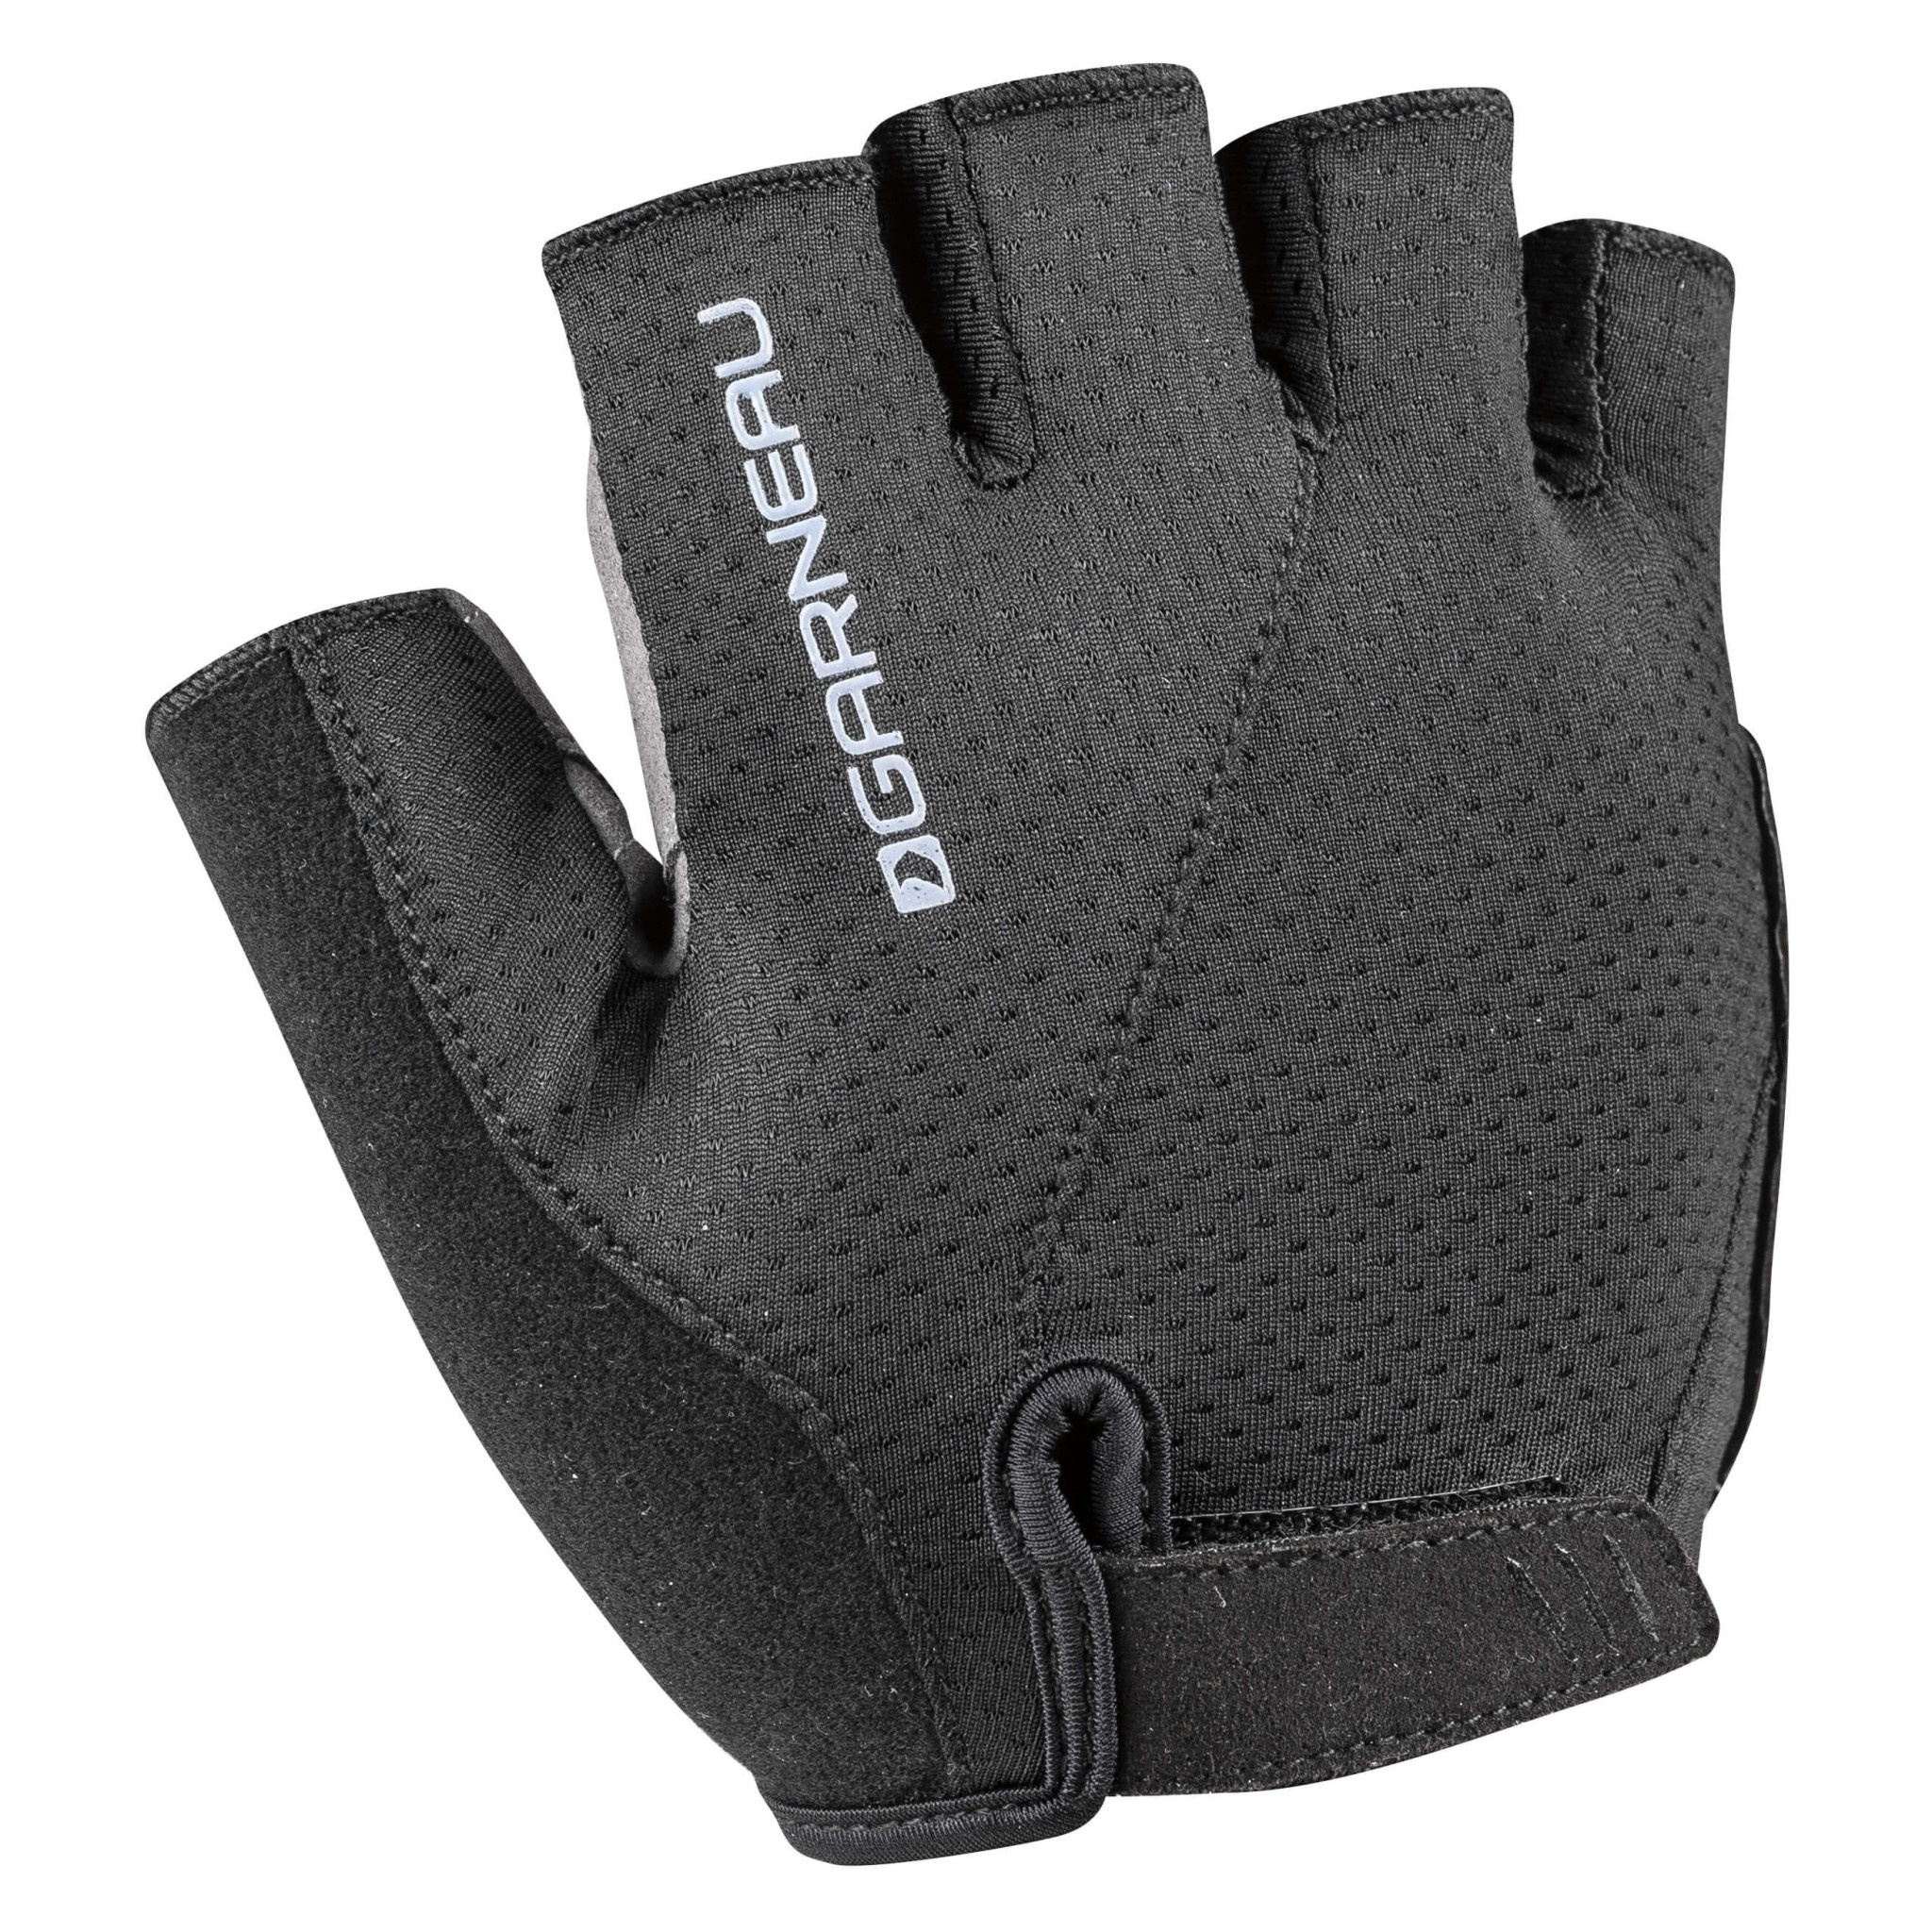 Garneau Air gel Ultra Men's gloves